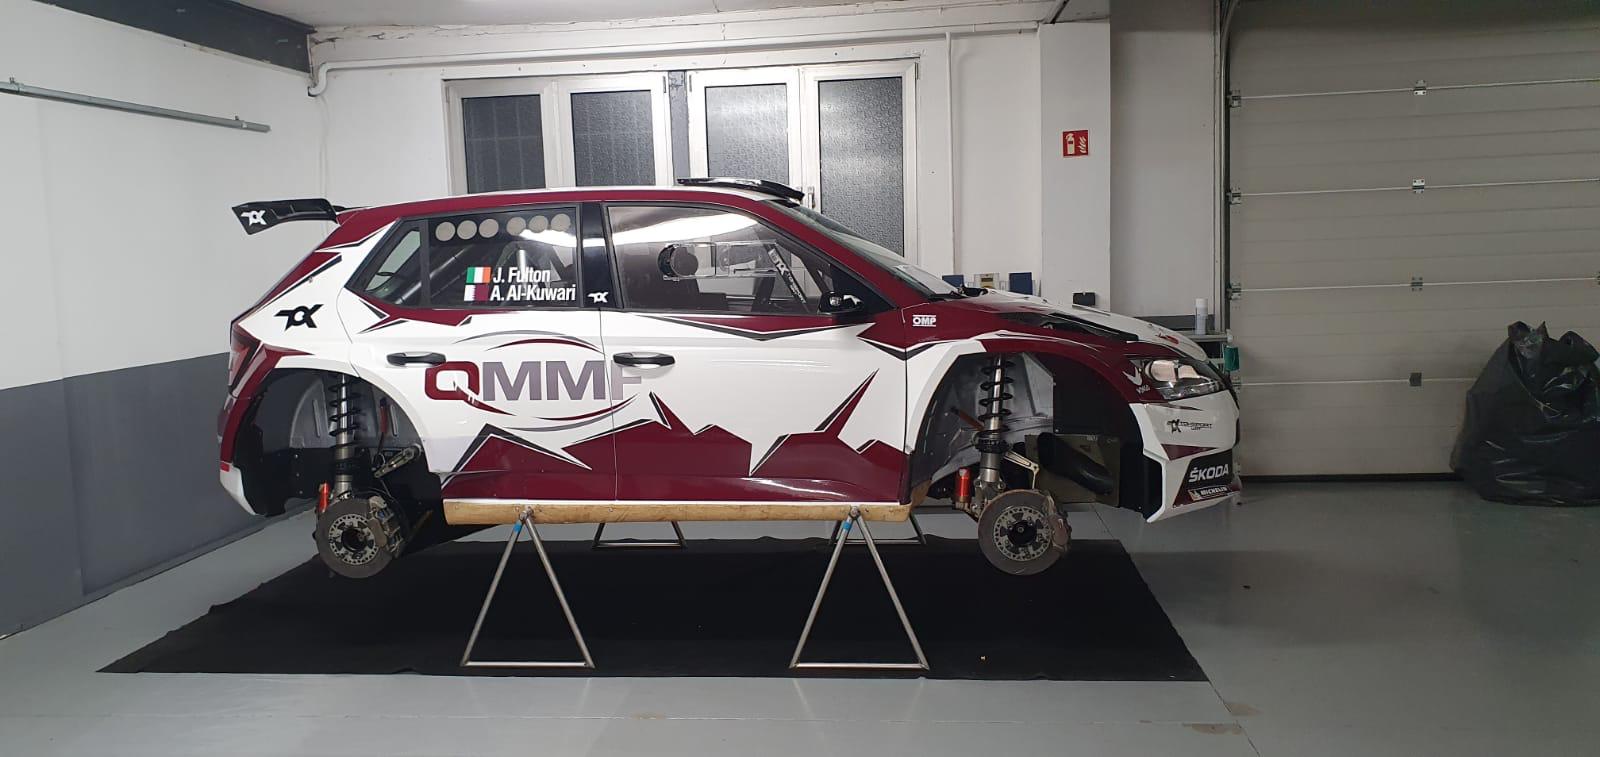 Abdulaziz Al-Kuwari aims to win Qatar Rally for second time